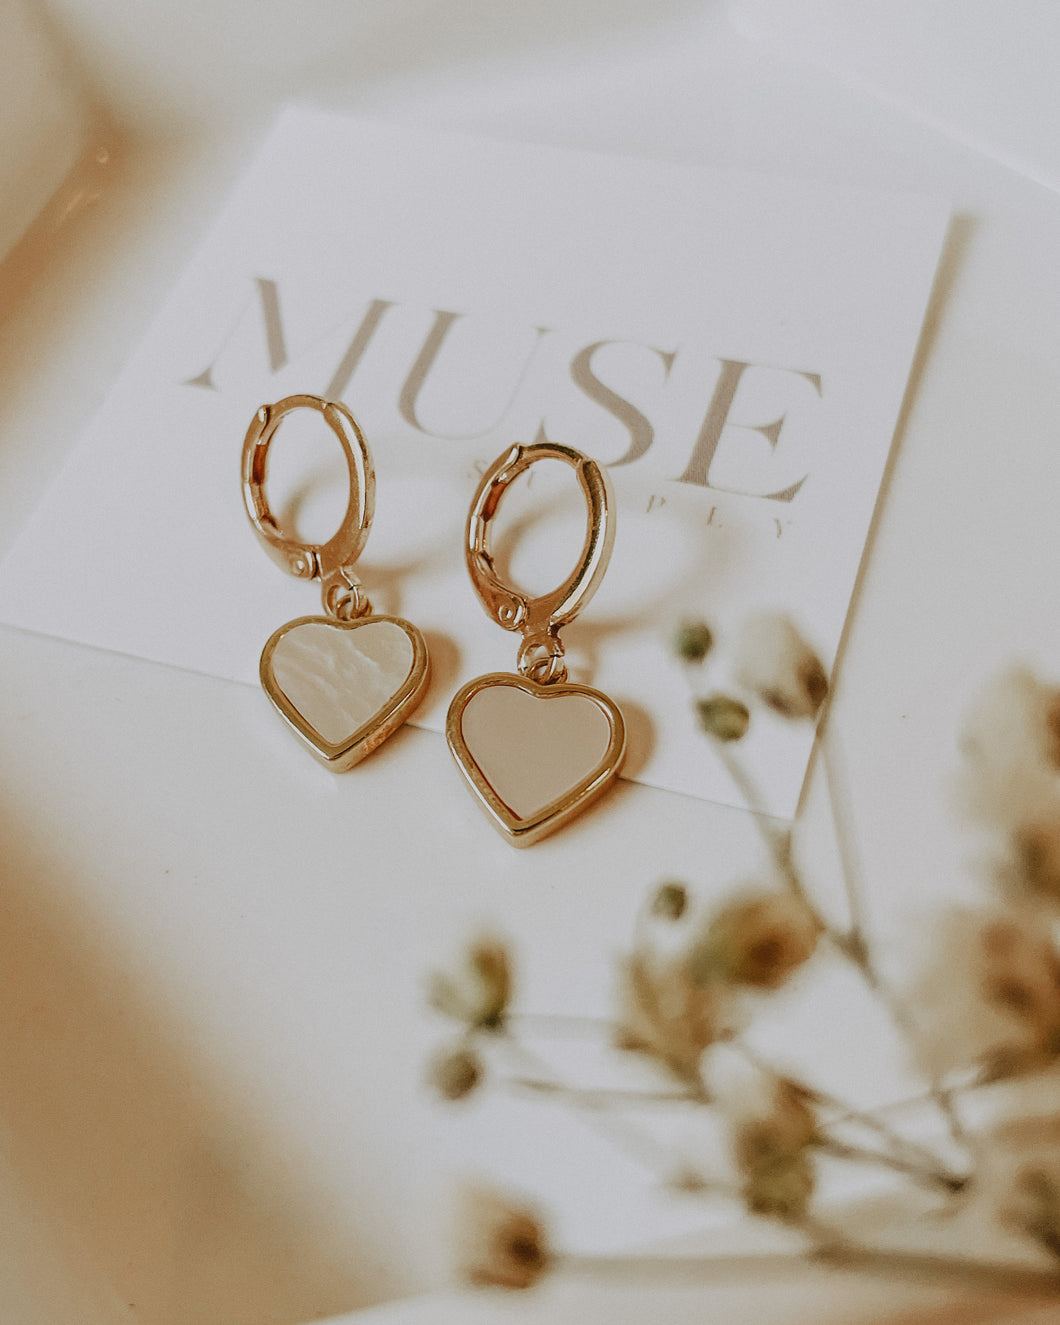 This Love Heart Earrings